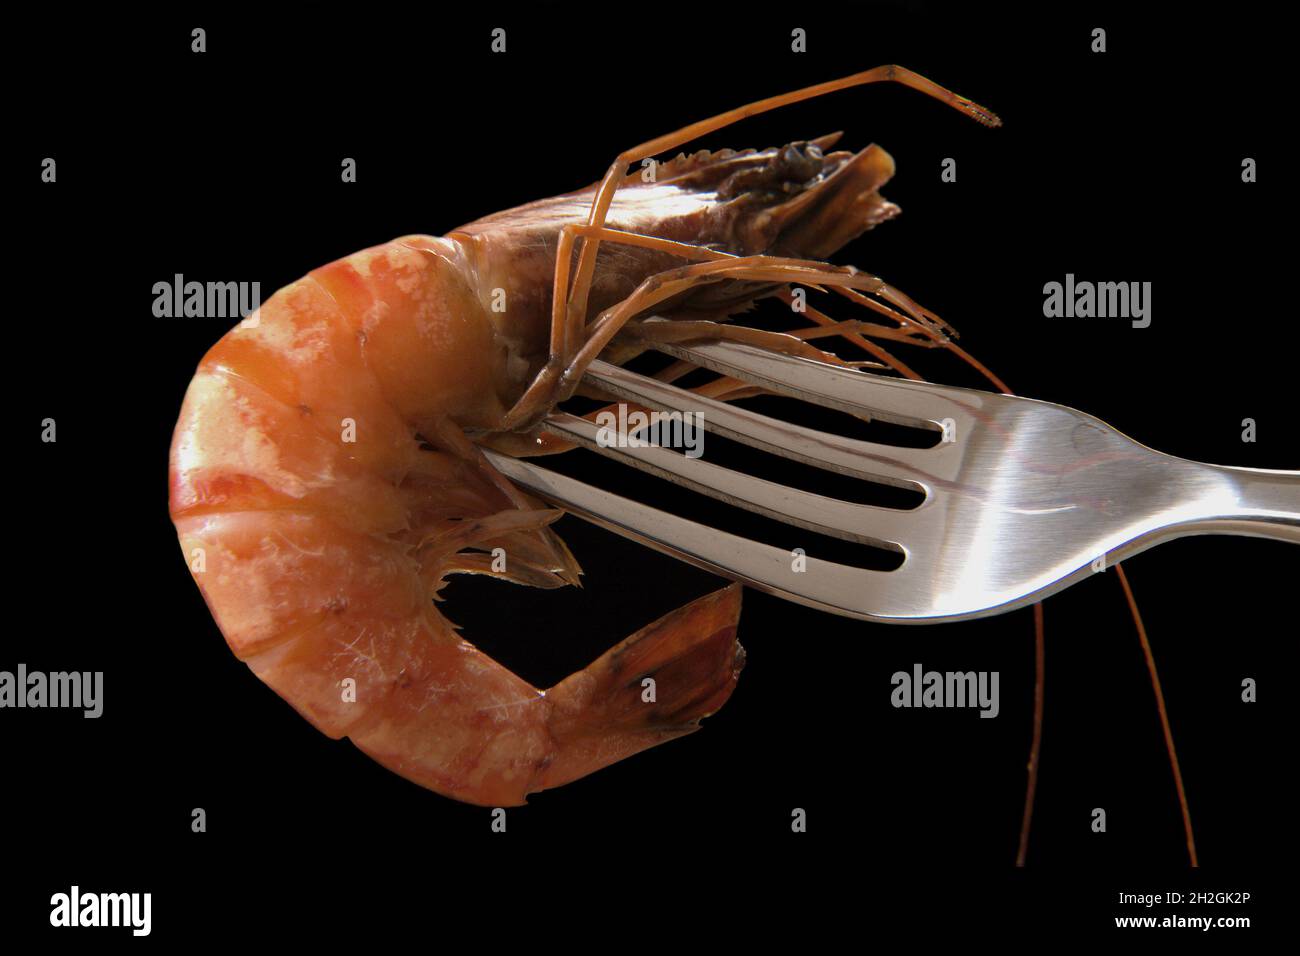 Shrimp on a fork against a black background Stock Photo